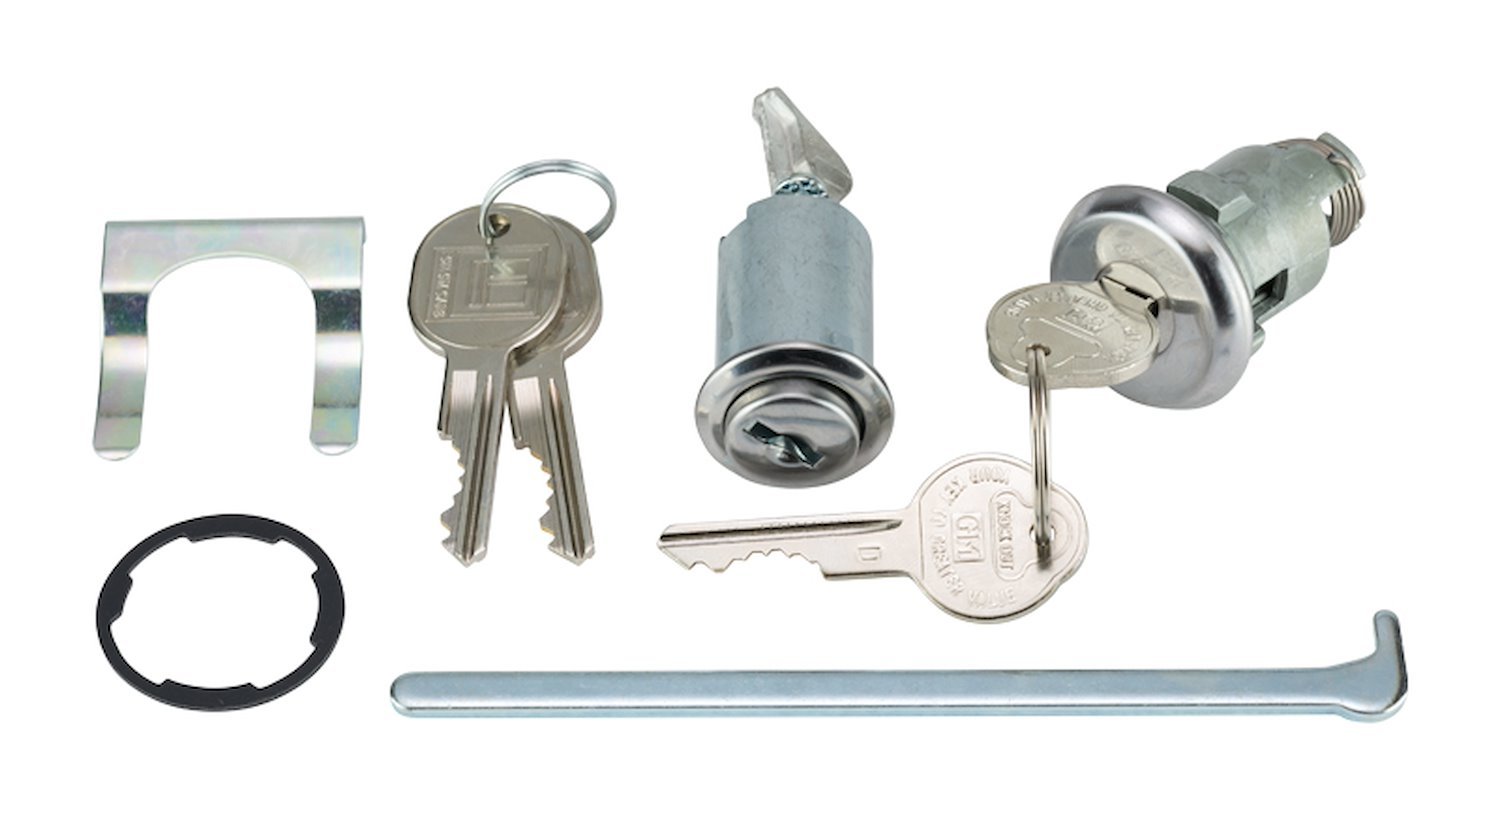 Trunk & Glovebox Lock Set Fits Select 1967 GM Models [Original Pearhead Keys]